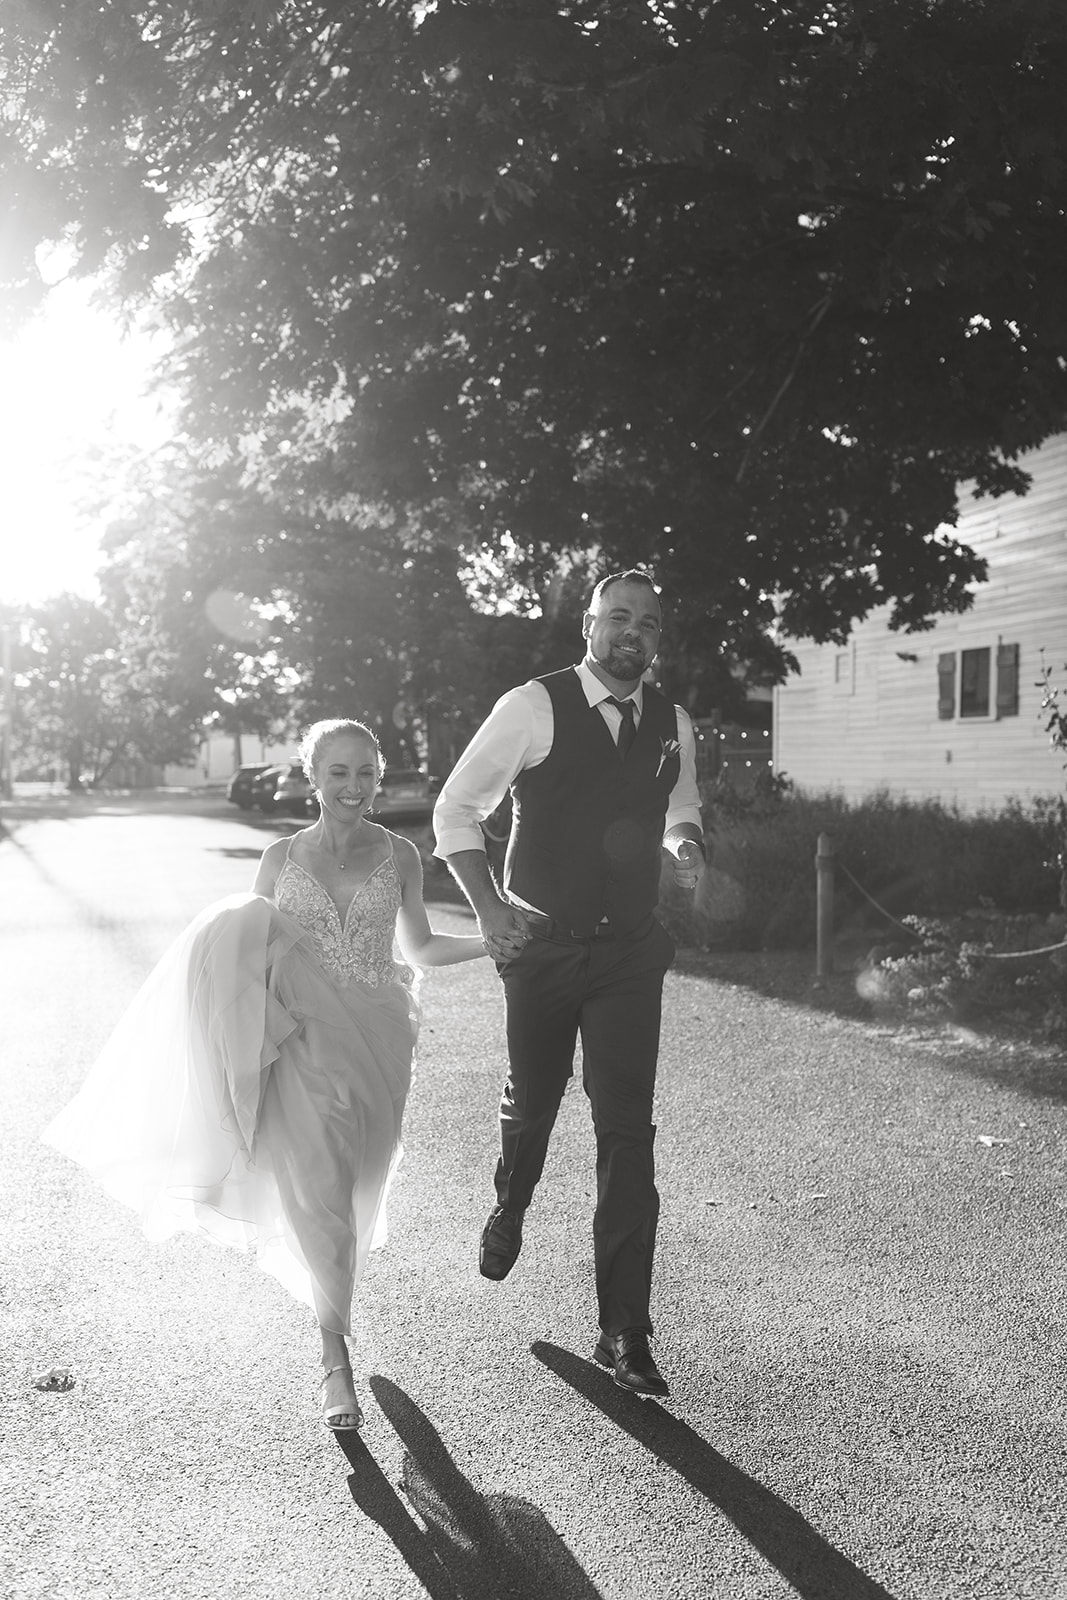 copper gables barn wedding roy washington state photographer couples poses wedding venue ideas photoshoot ideas